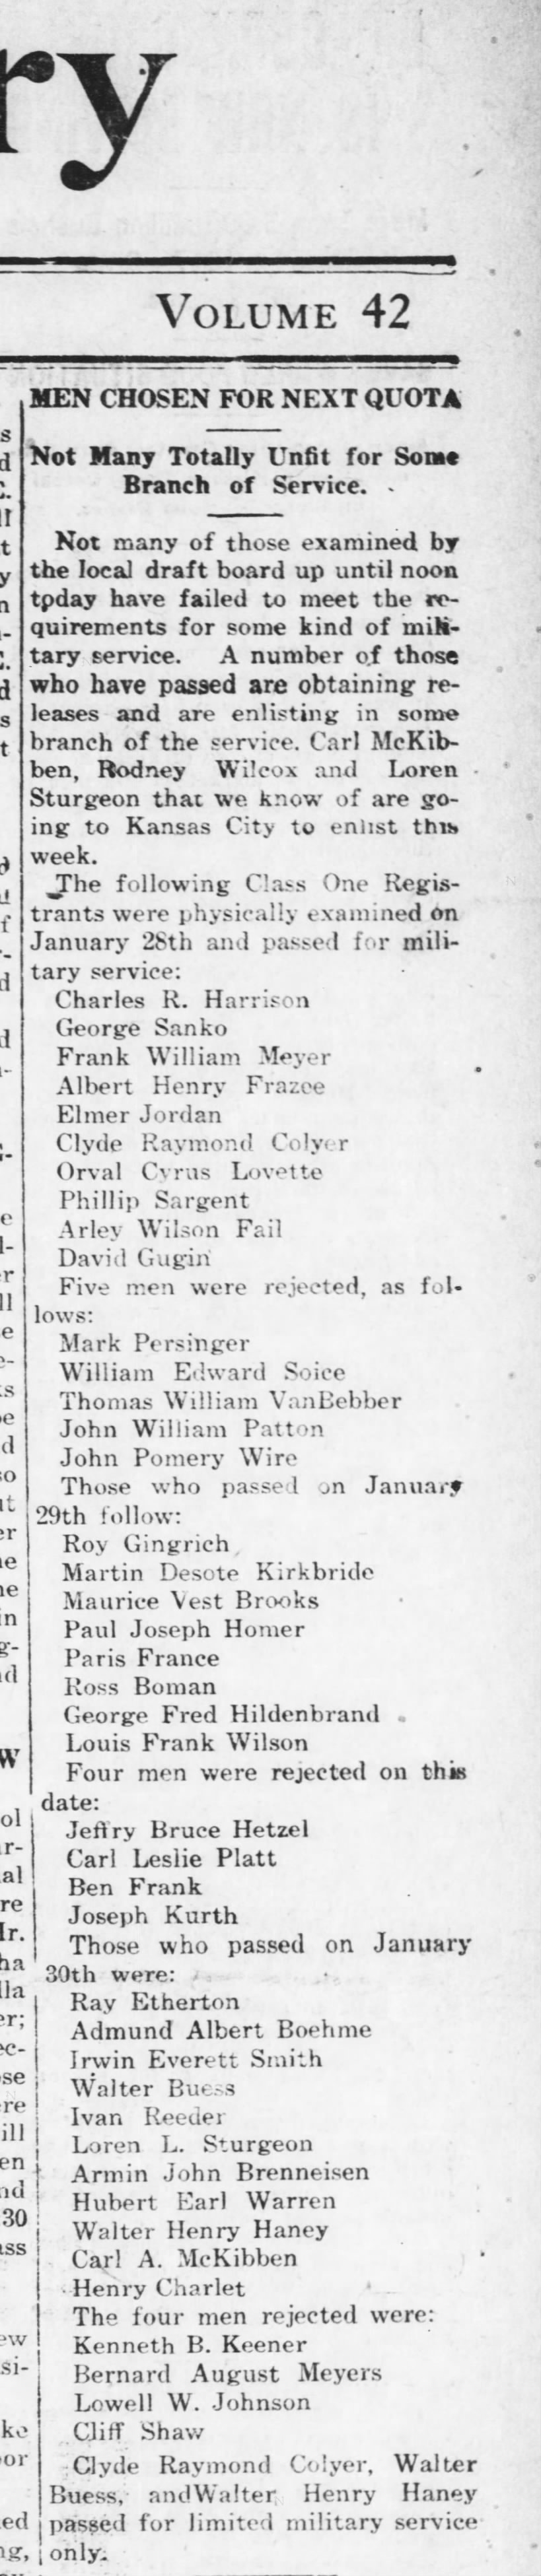 Etherton, Ray Anthony - military acceptance - Kinsley Mercury, 31 Jan 1918 pg 1